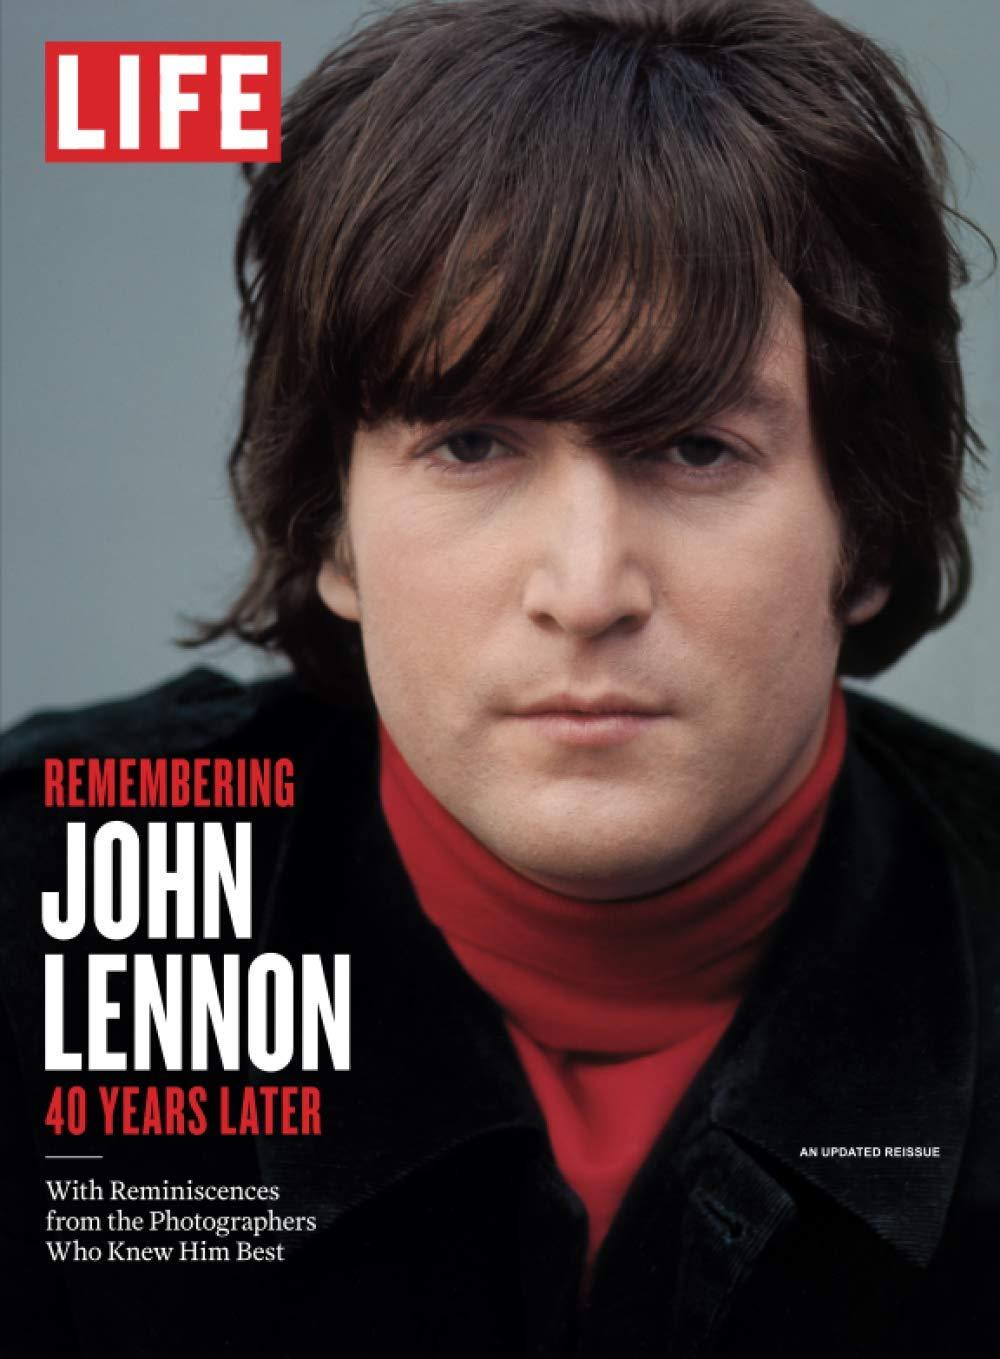 Portada de la revista Life dedicada a John Lennon